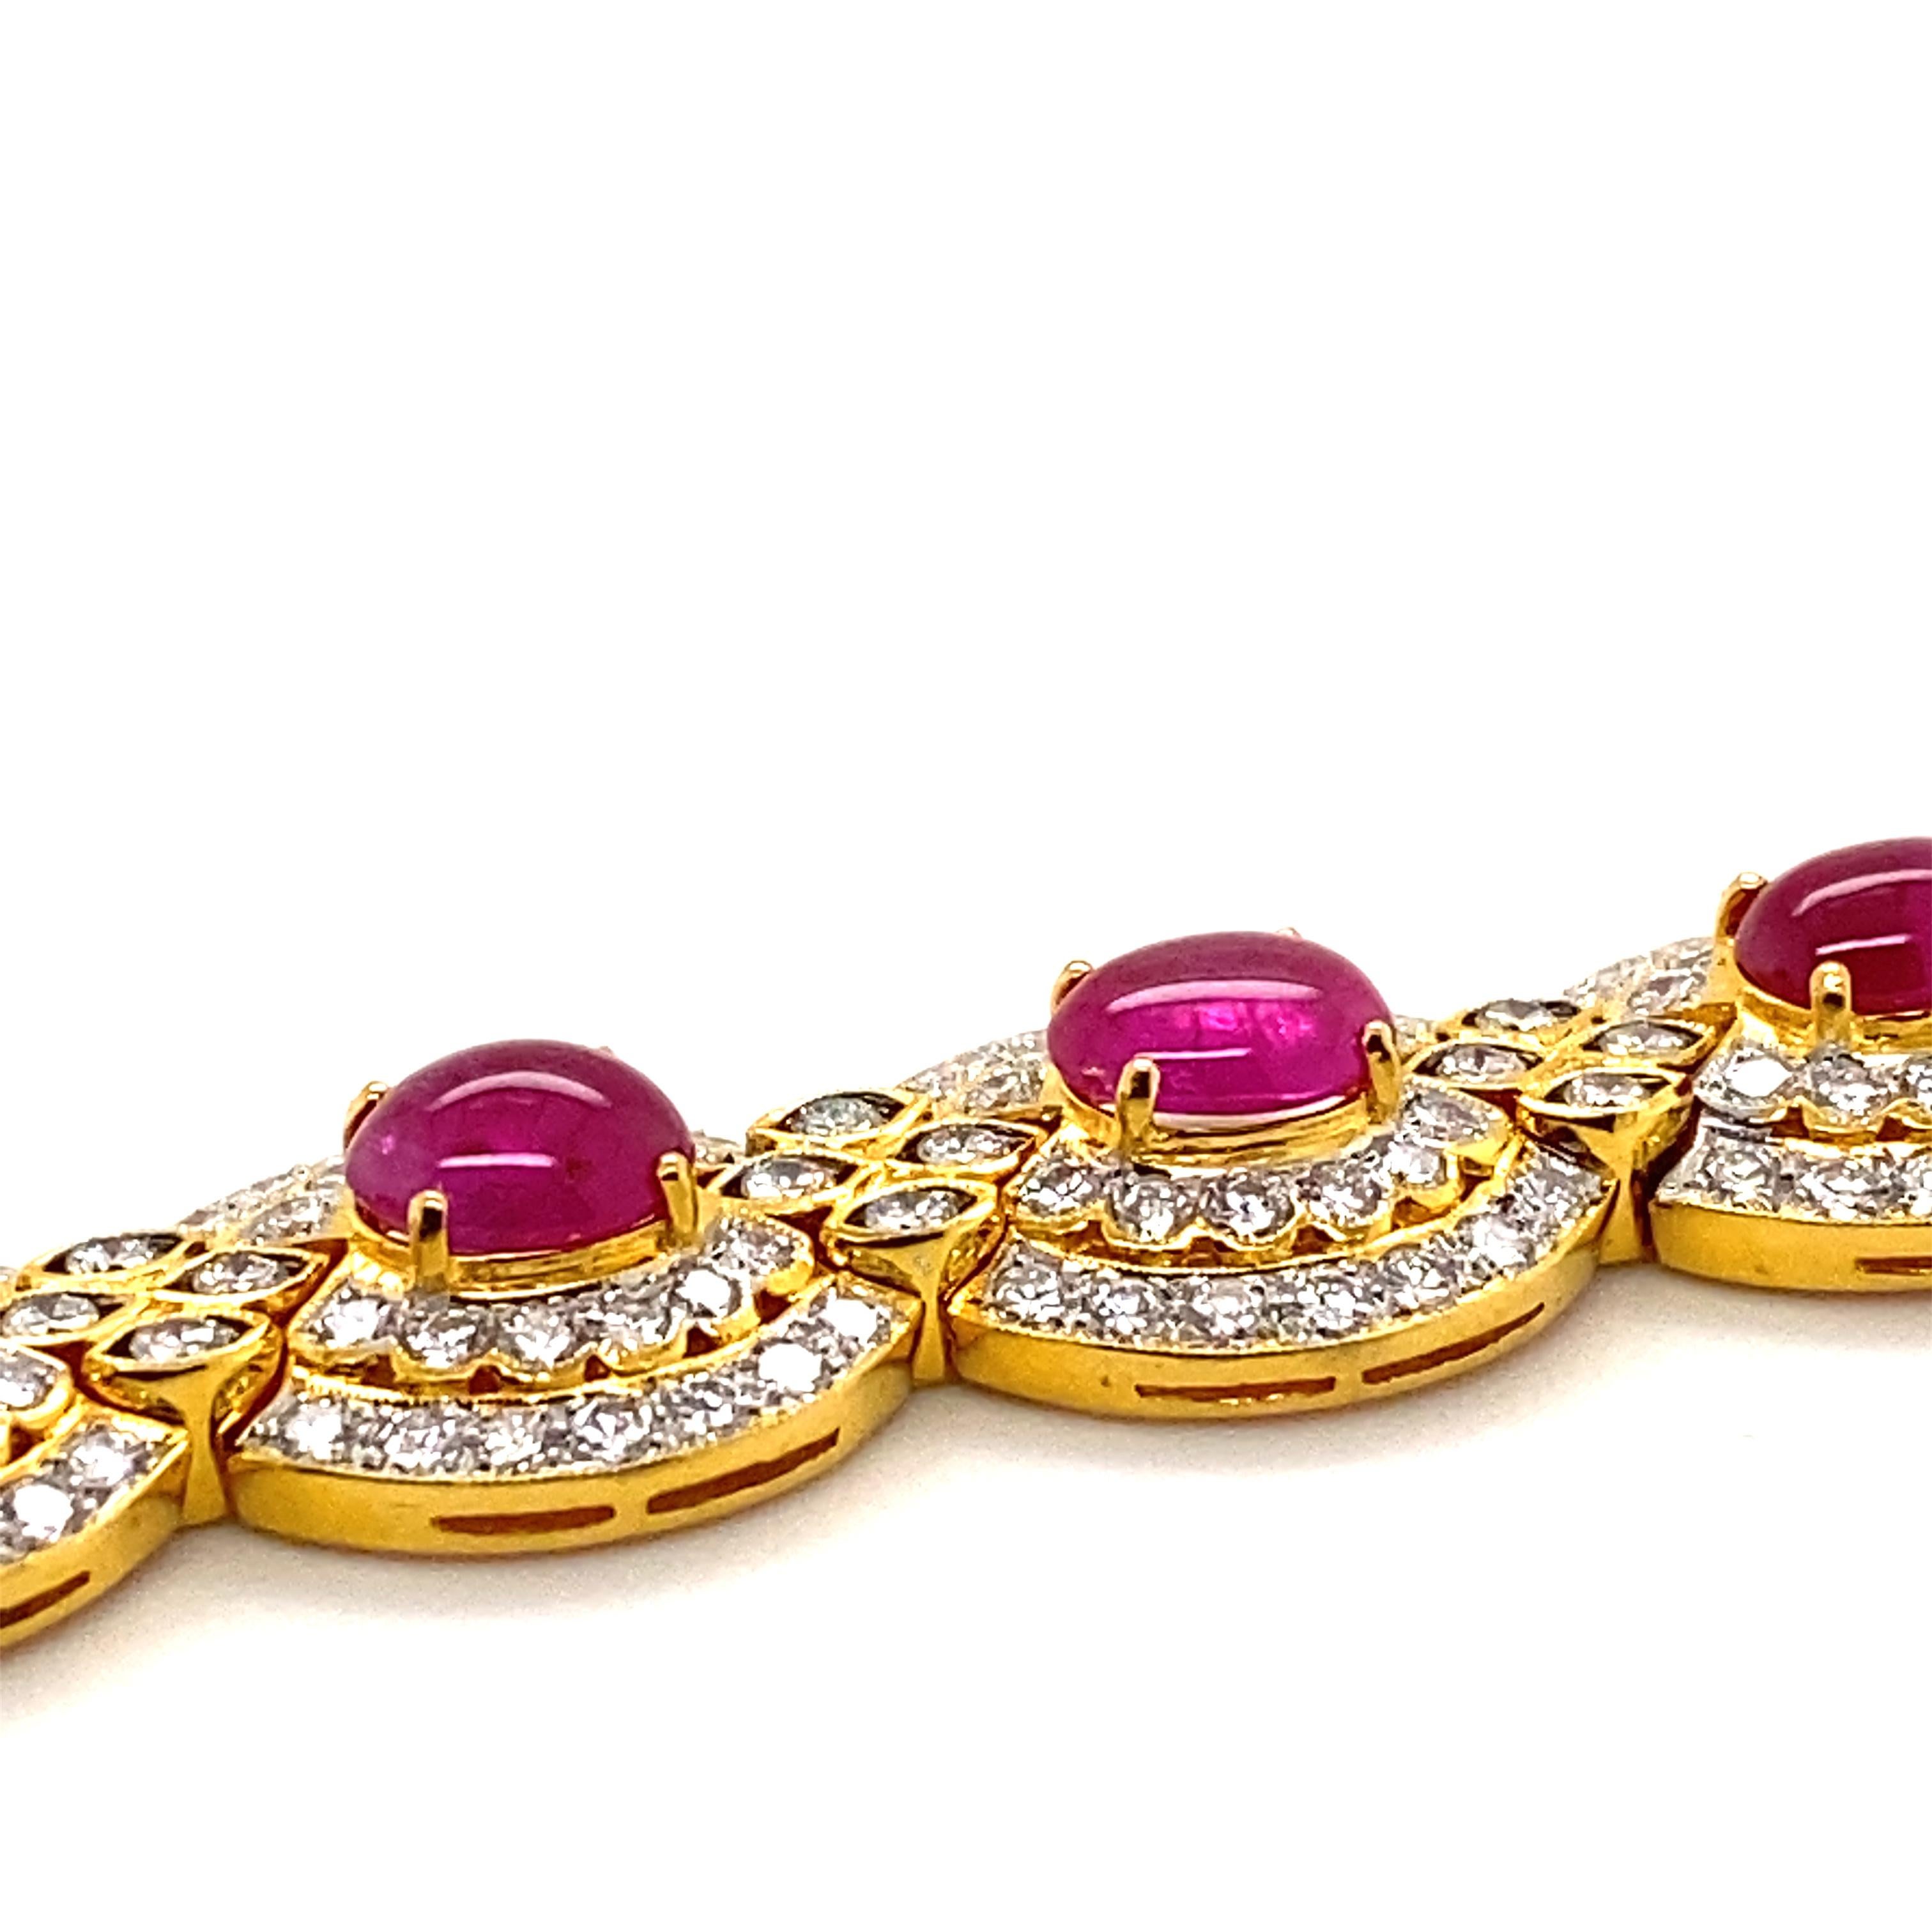 Women's or Men's Splendid Ruby and Diamond Bracelet in 18 Karat Yellow Gold